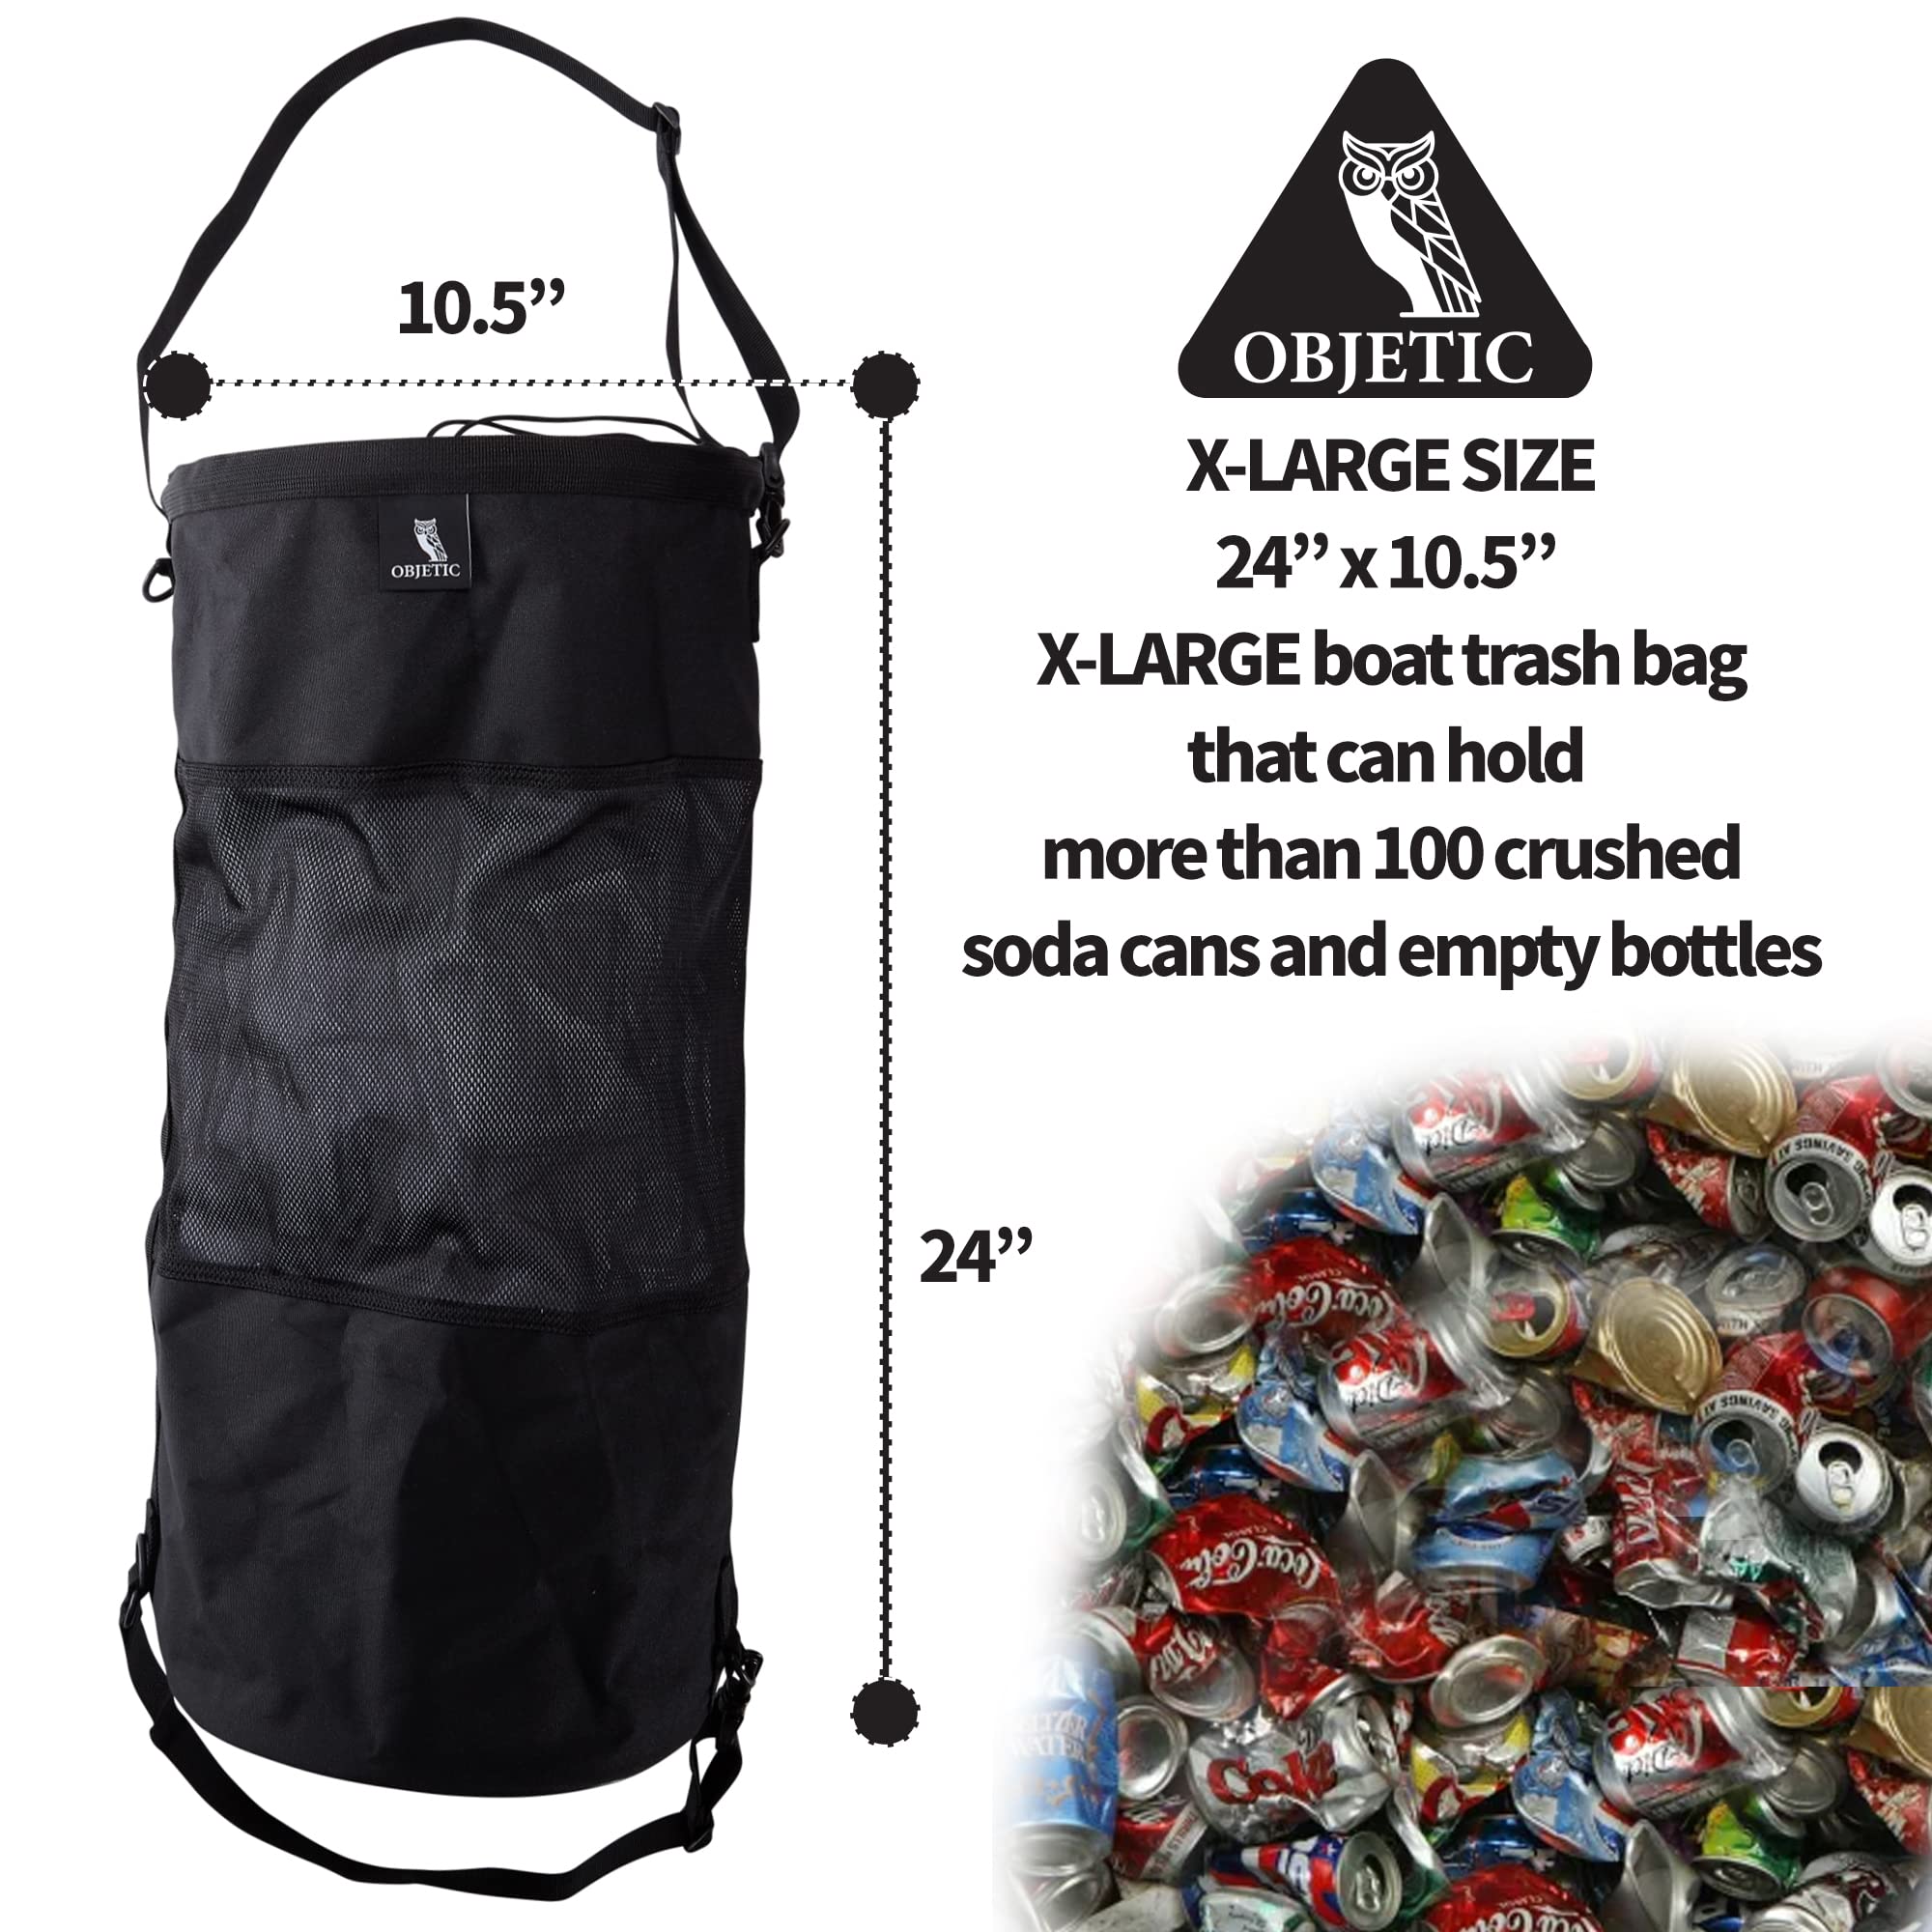 OBJETIC Boat Trash Bag for Easy Emptying Trash with Portable Mesh Trash Bag - Great for Avoiding Trash Flying on Boat, Kayak, Fishing, Camping - Collapsible Mesh Trash Can for Boat (Black)